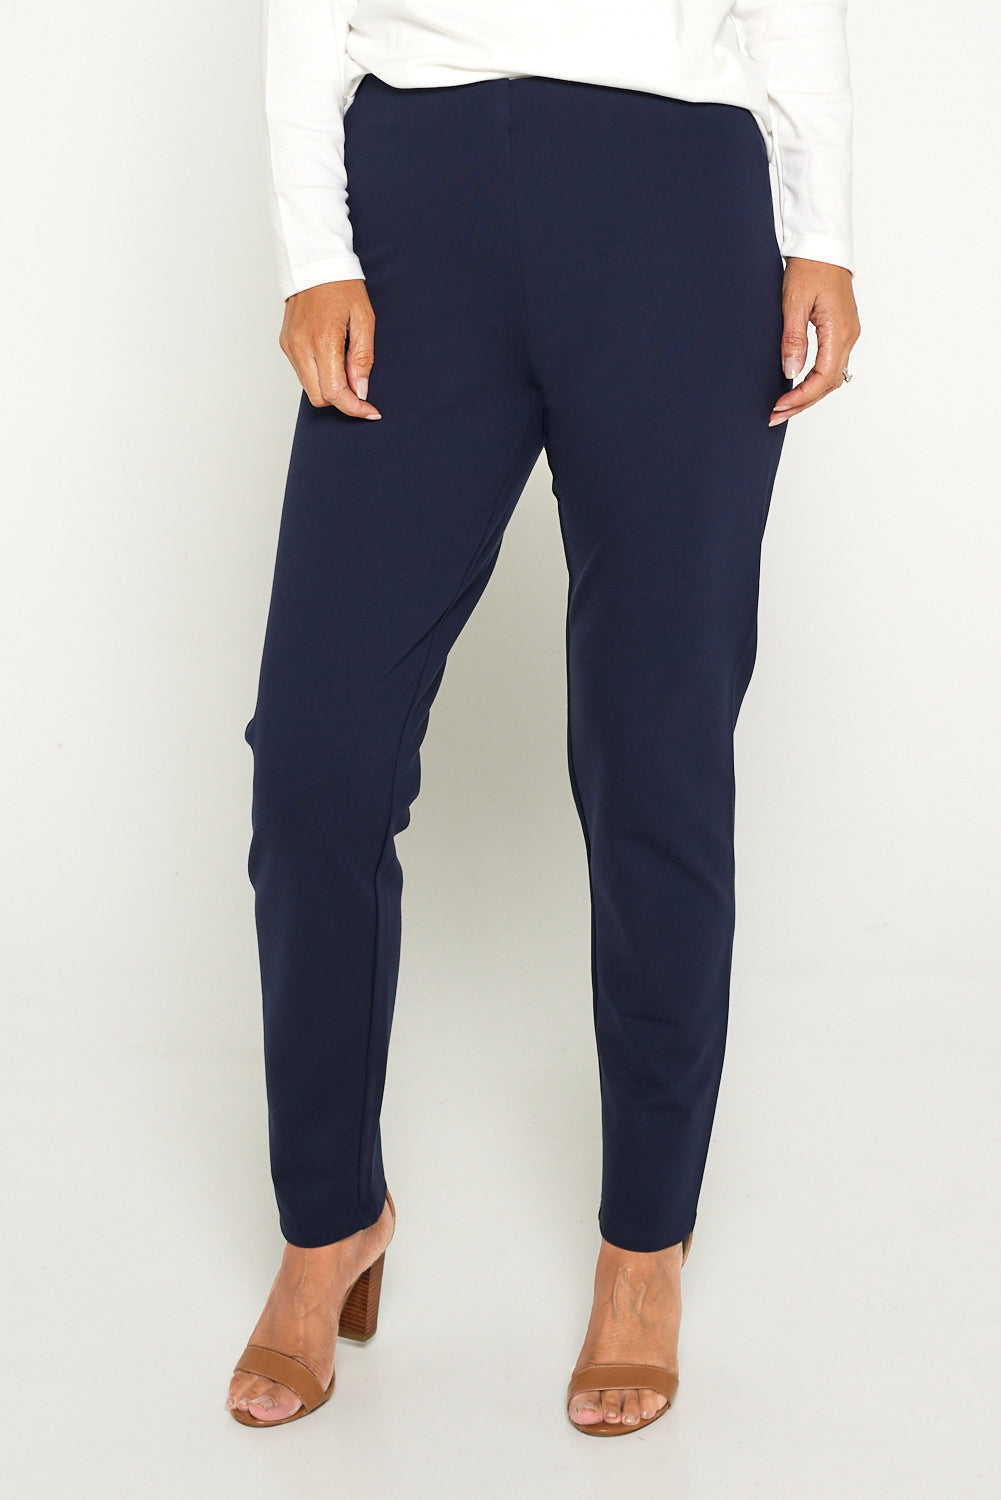 TULIO Fashion | Pushkin Pants - Navy | Mature Women's Staples